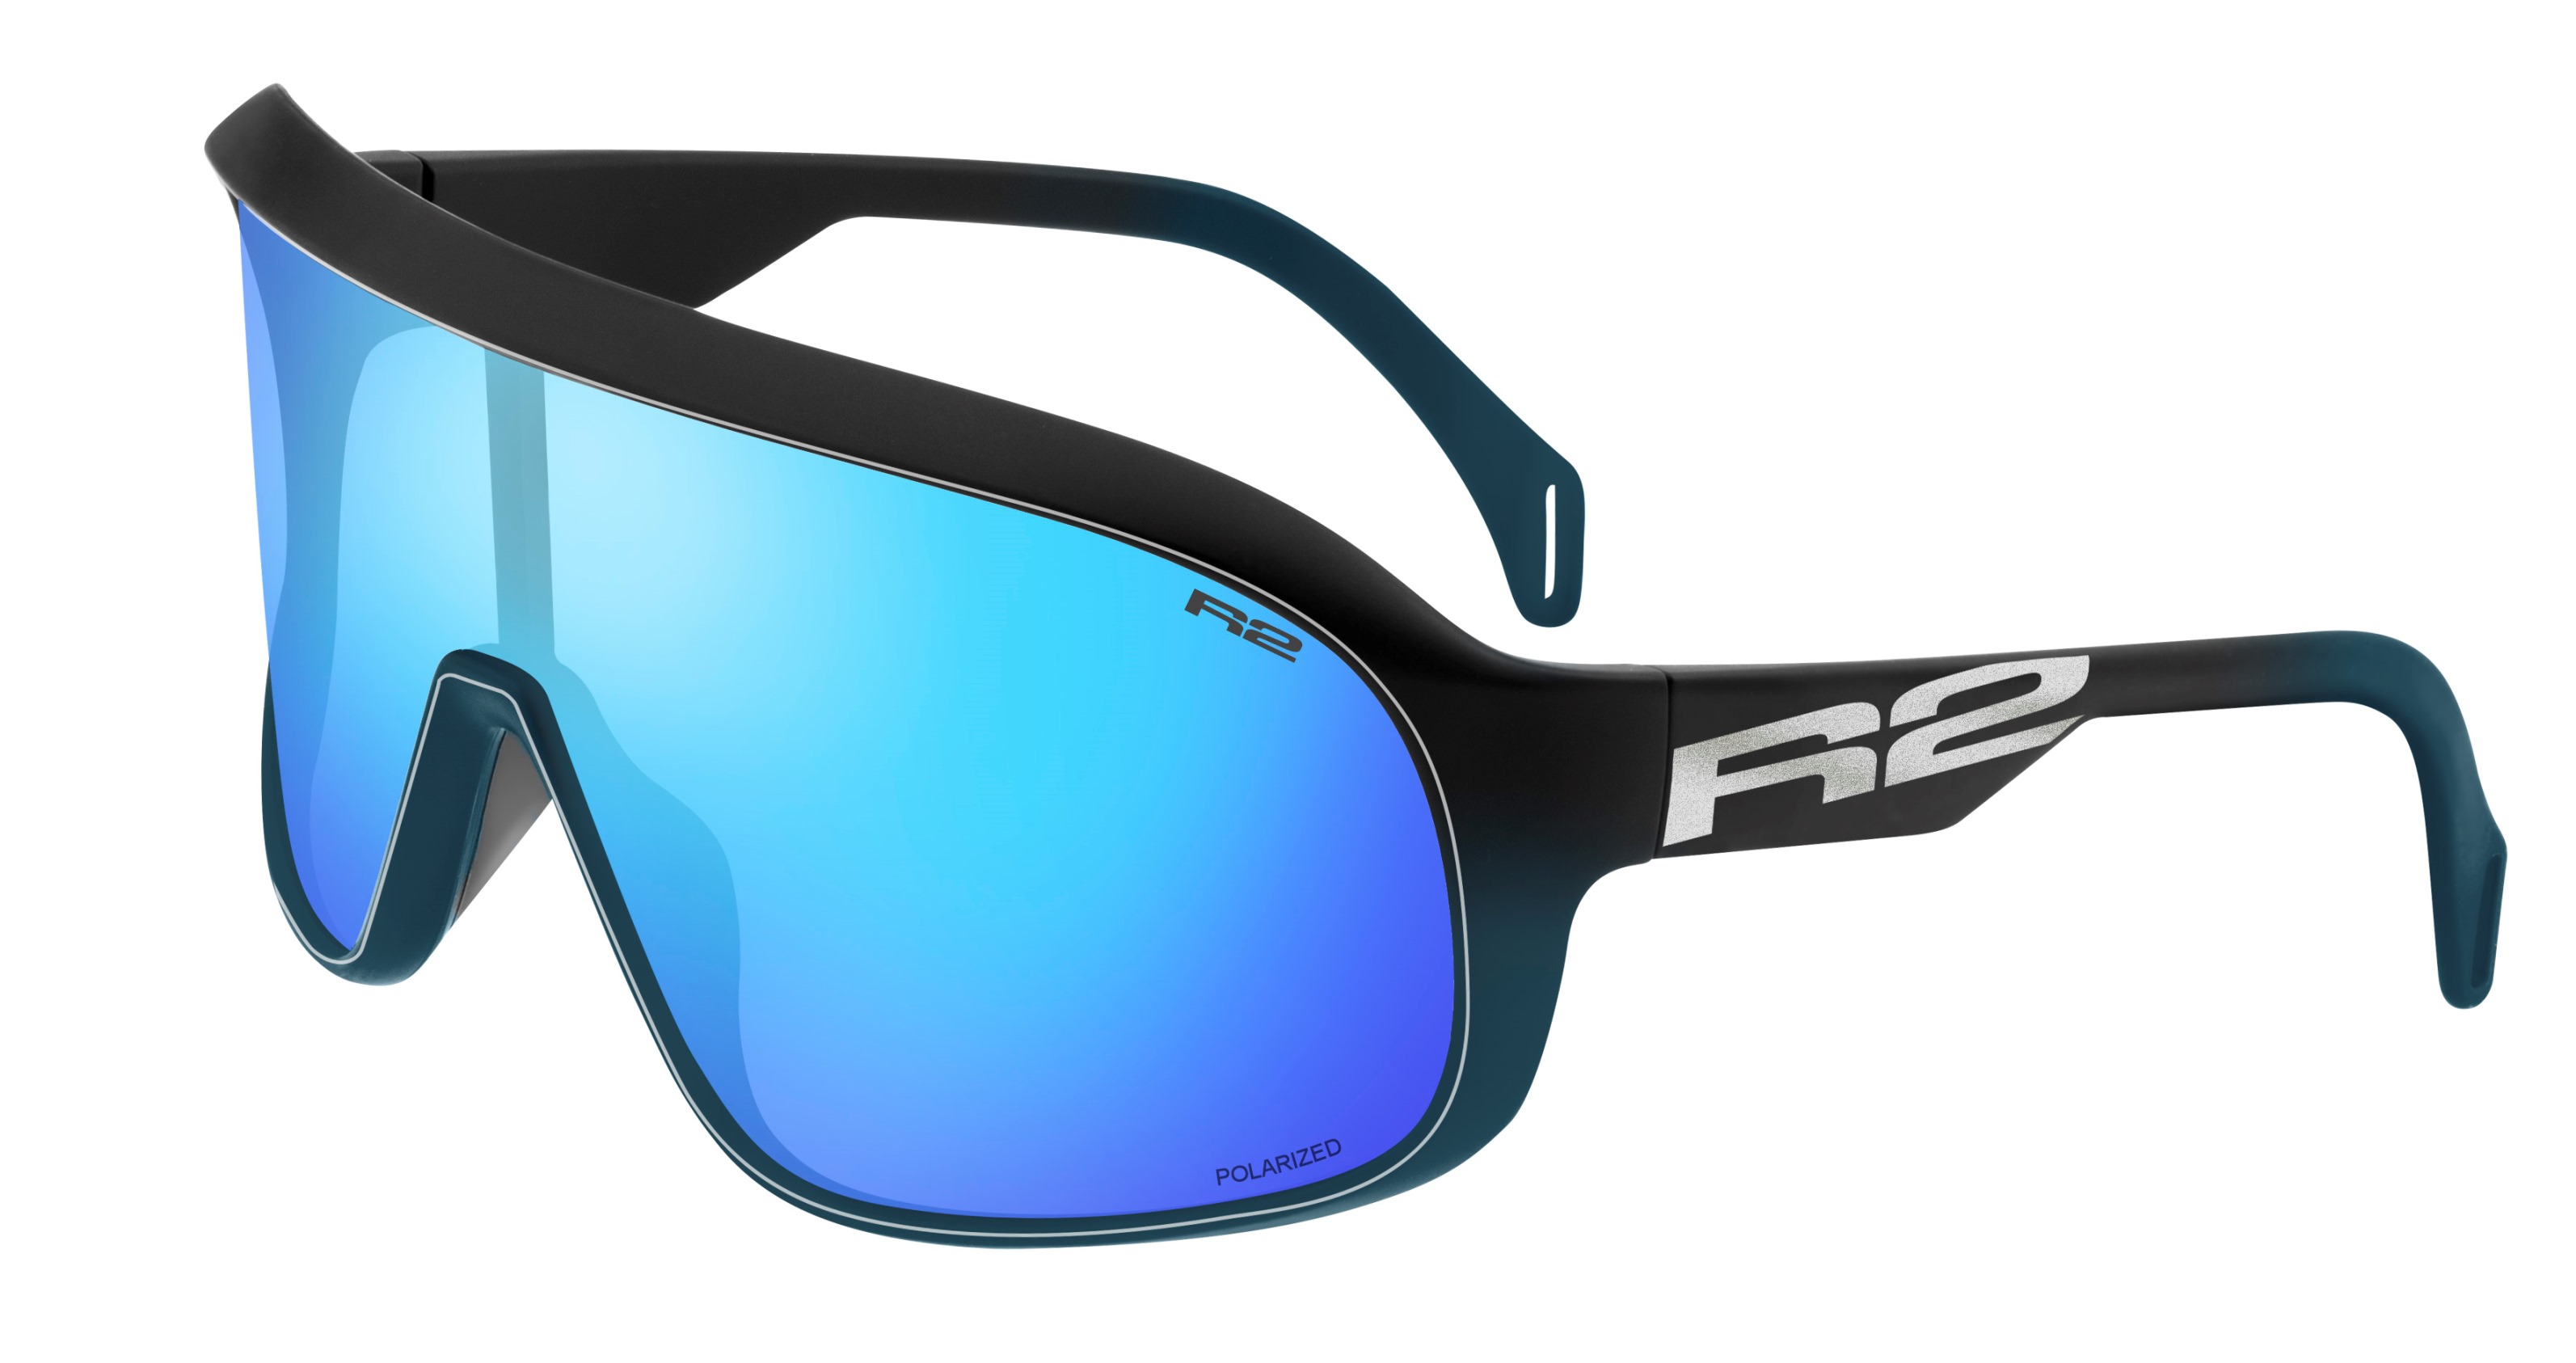 Sport sunglasses R2 FALCON AT105B standard